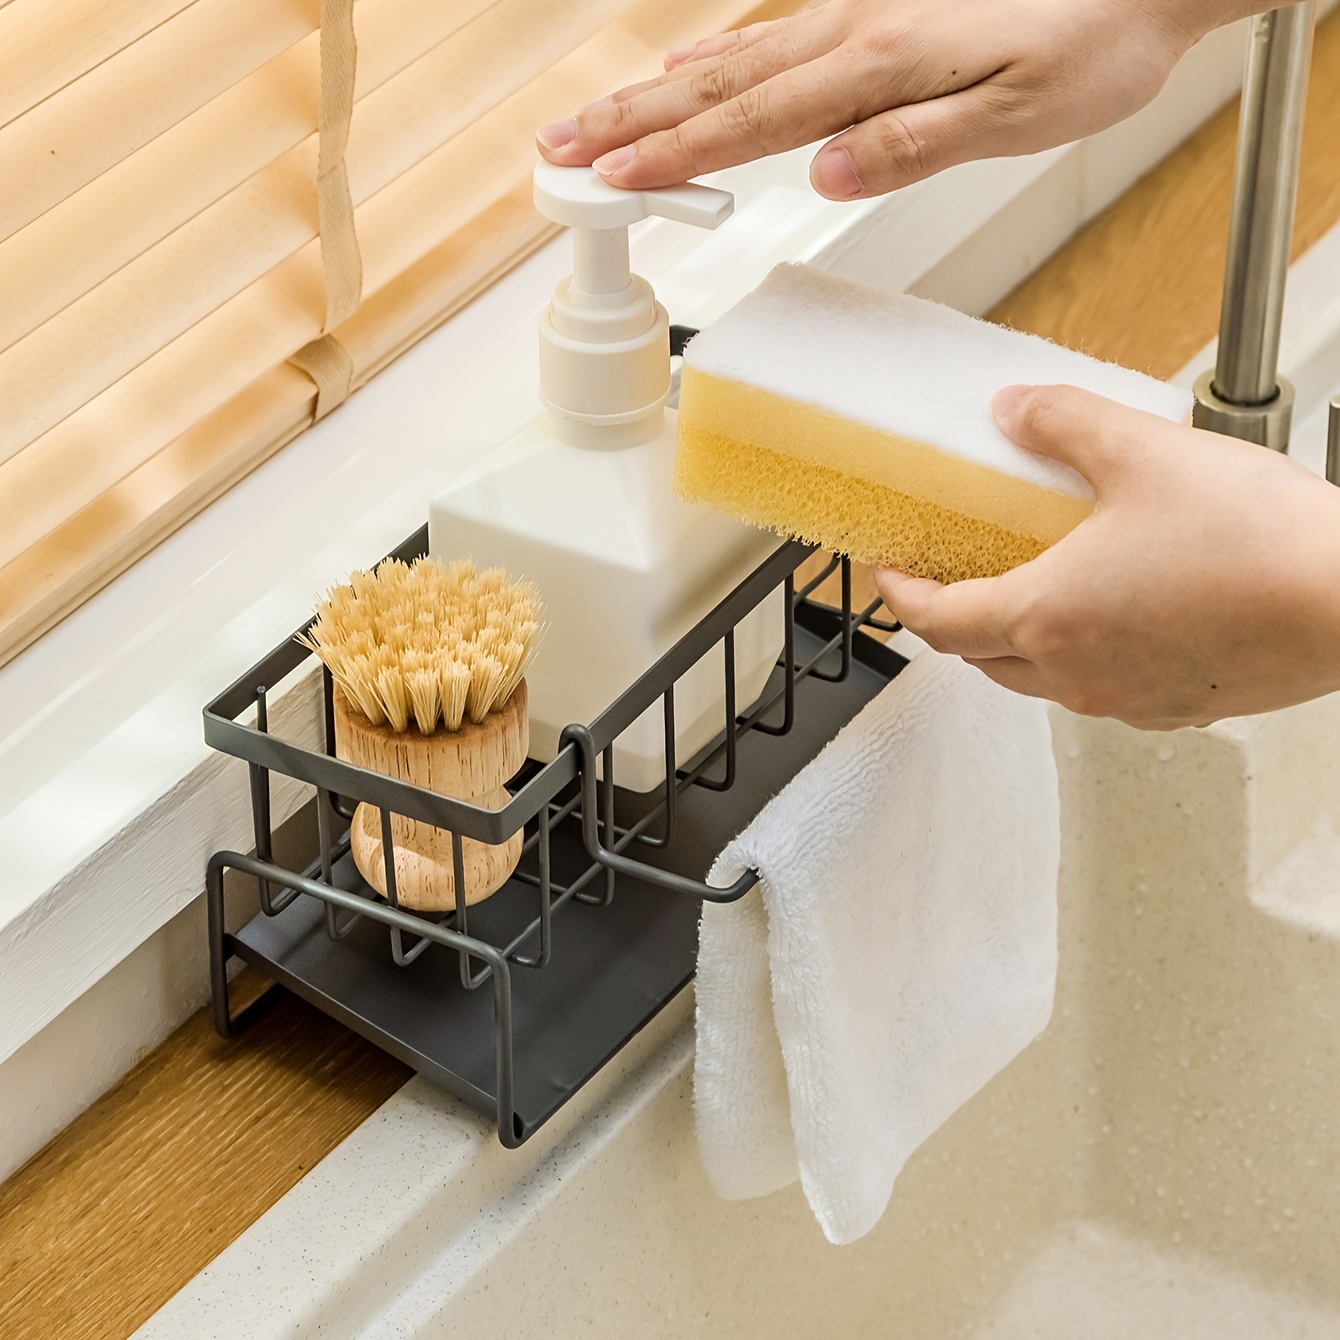 Kitchen Organizer Sink Drain Rack Soap Sponge Holder Faucet